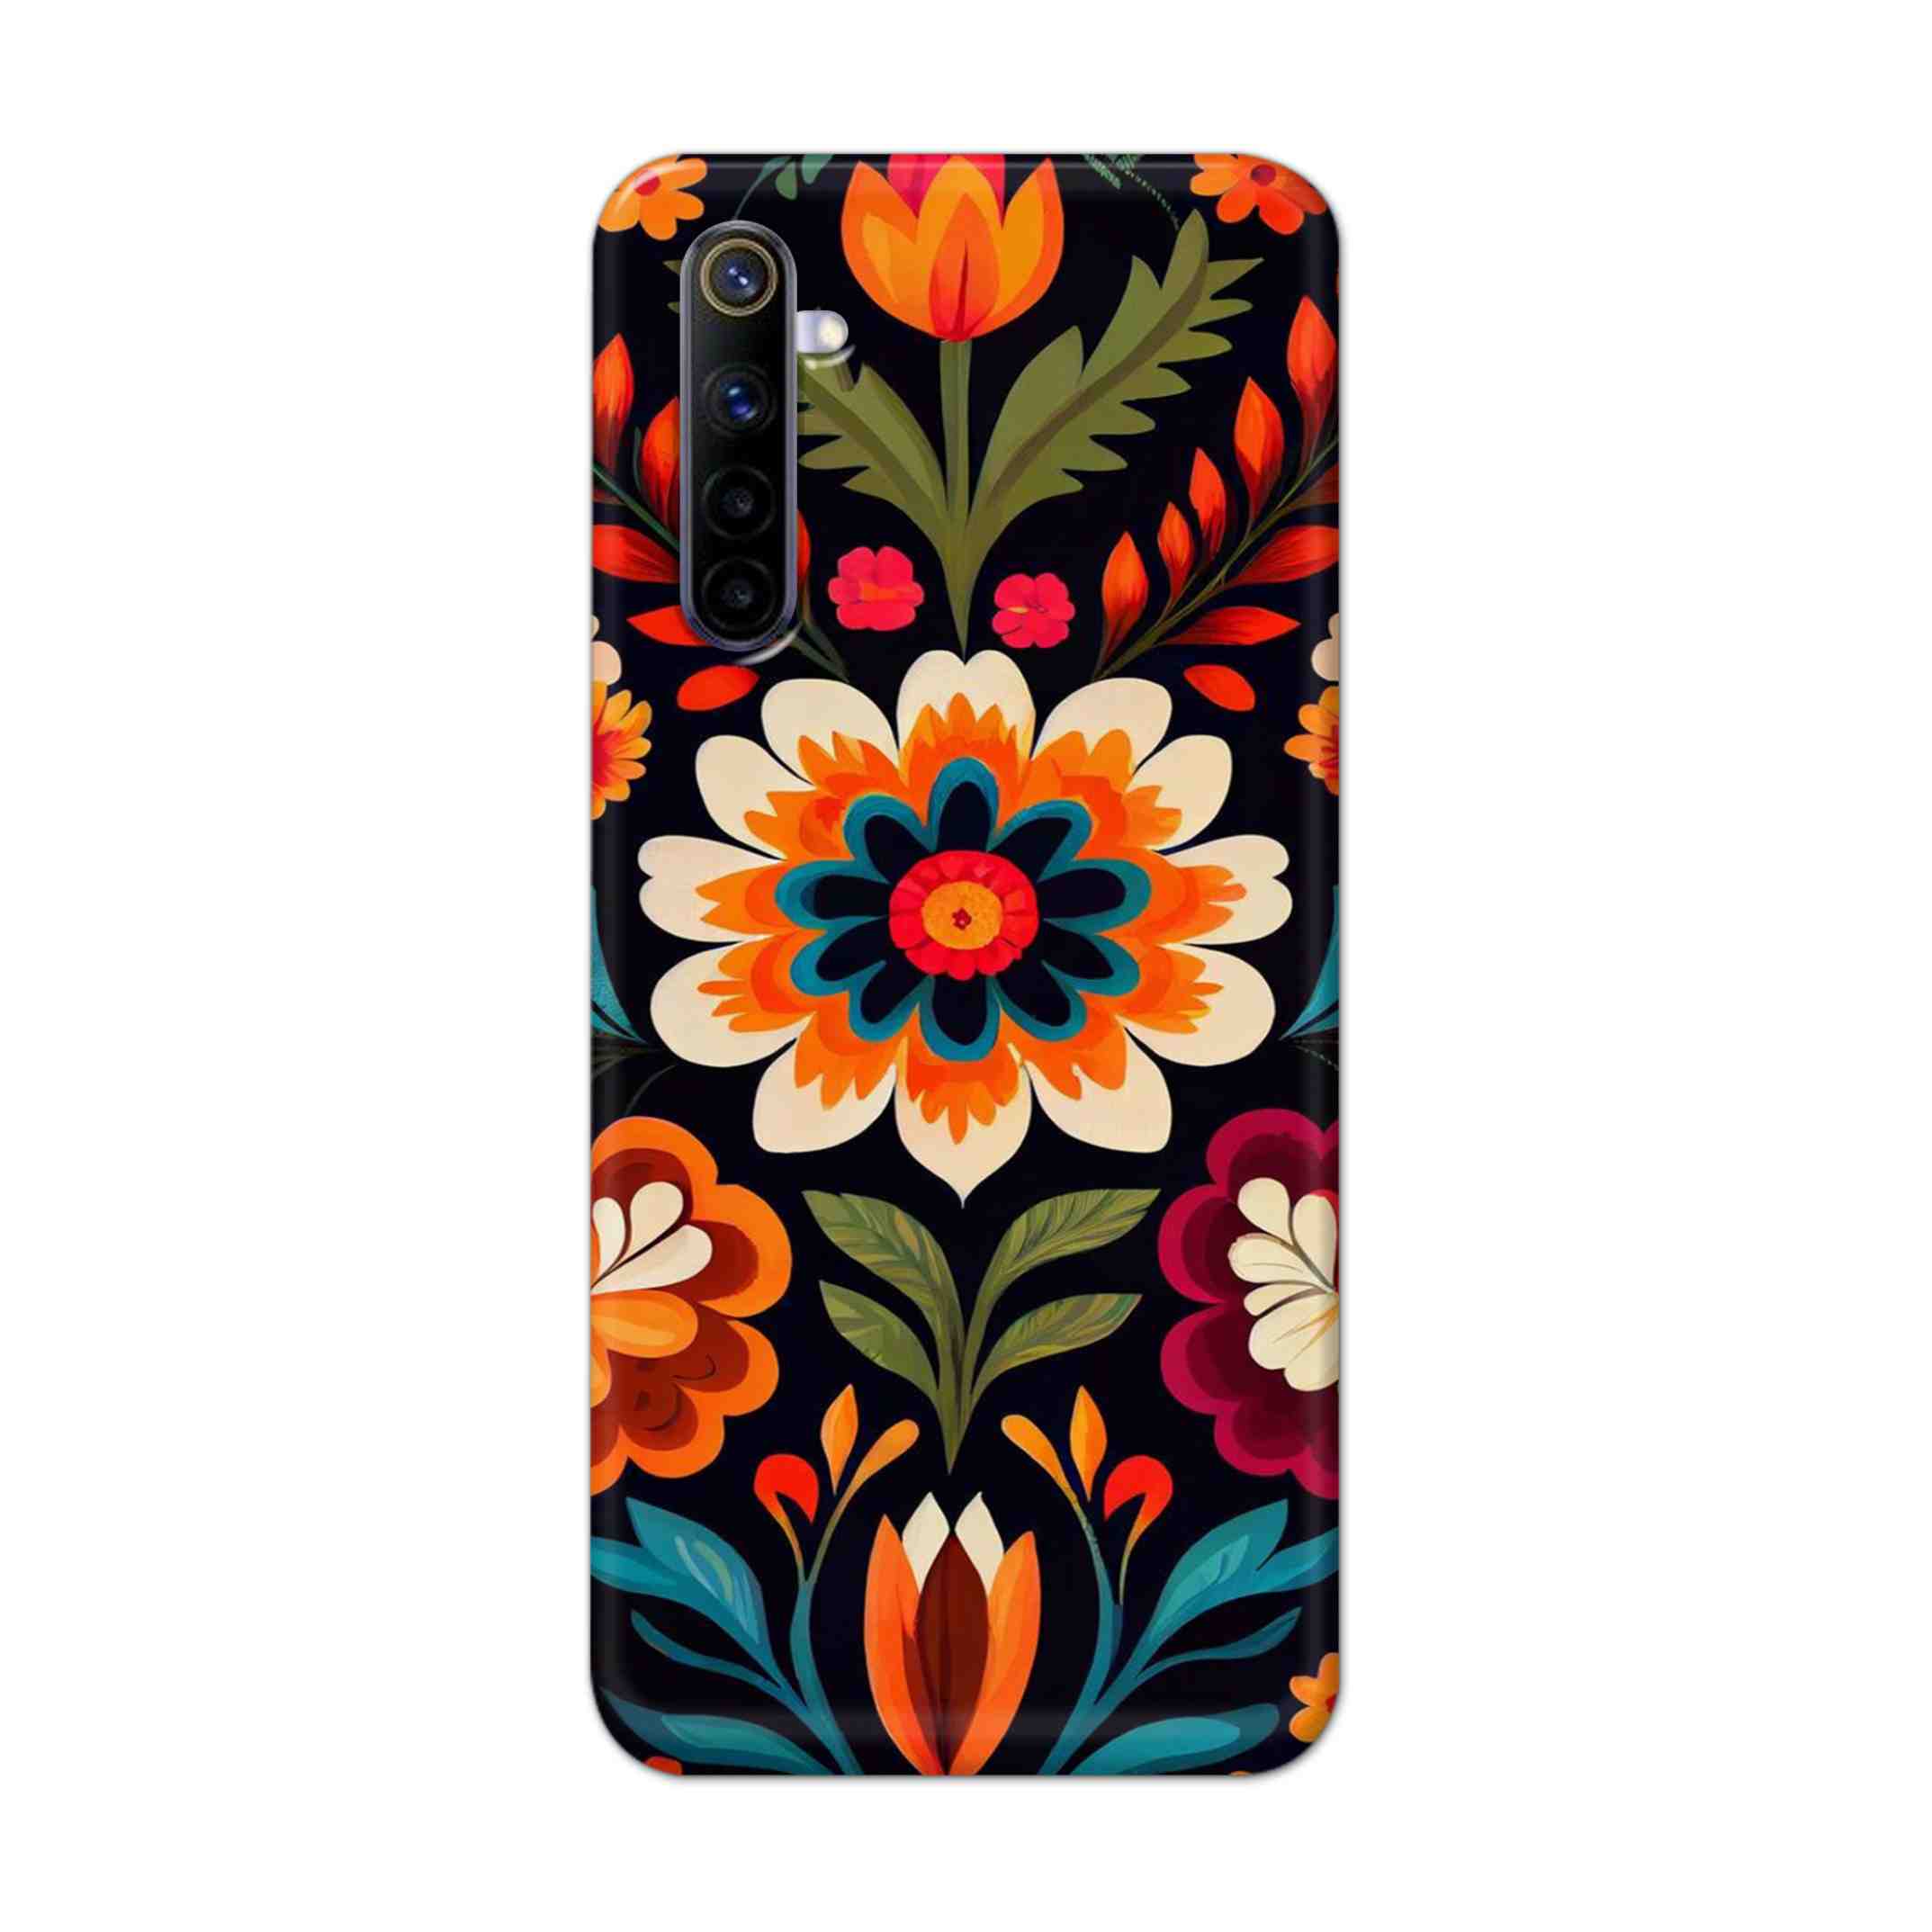 Buy Flower Hard Back Mobile Phone Case Cover For REALME 6 PRO Online